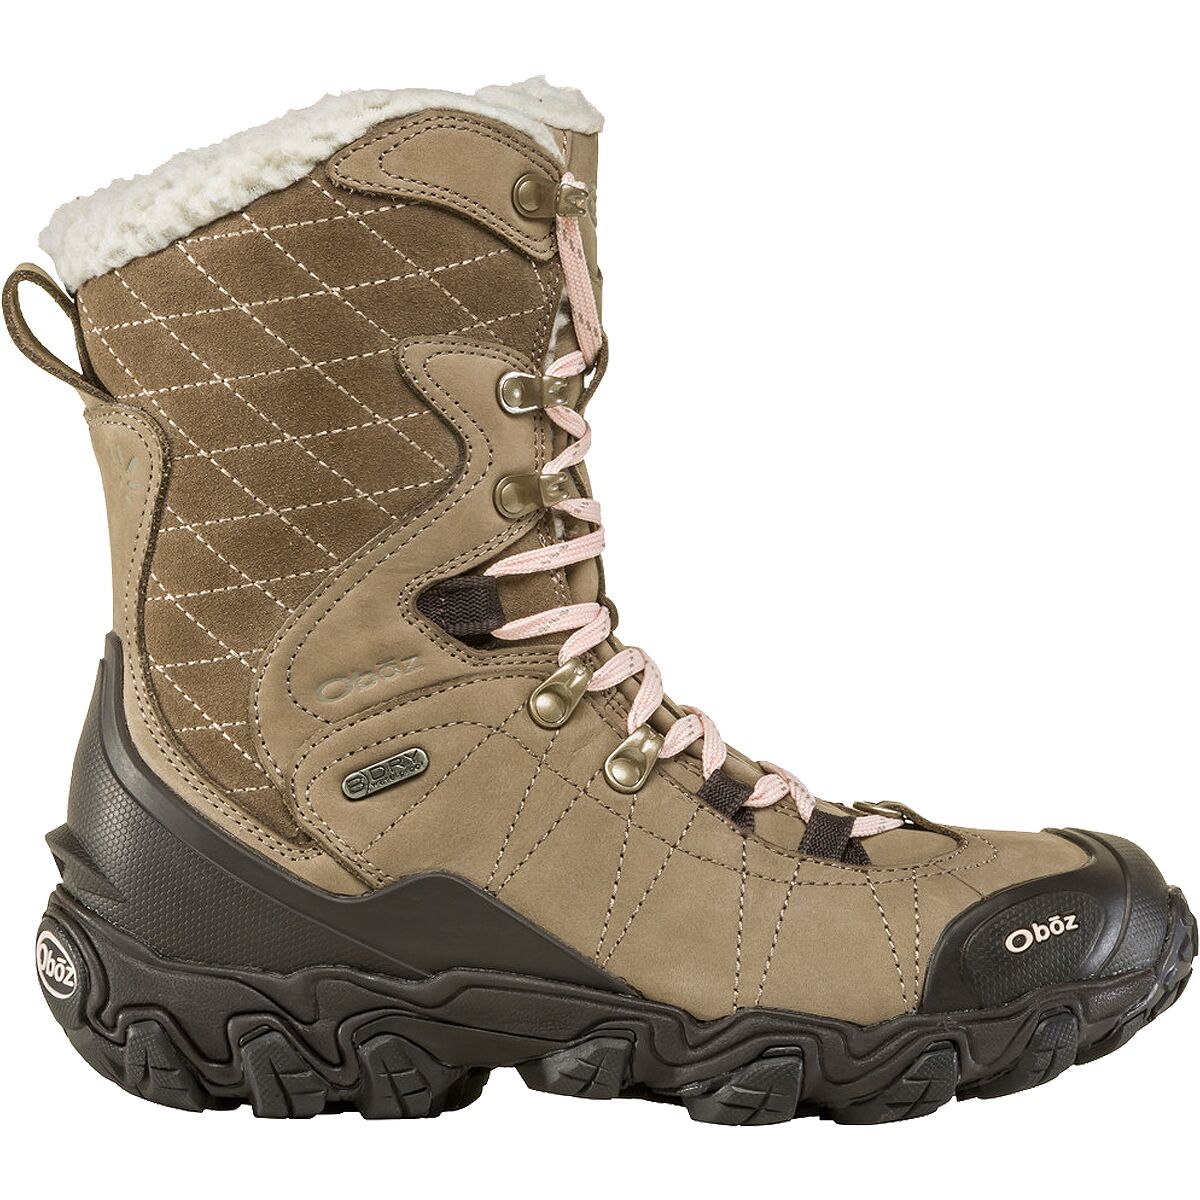 Bridger 9in Insulated B-Dry Boot - Women